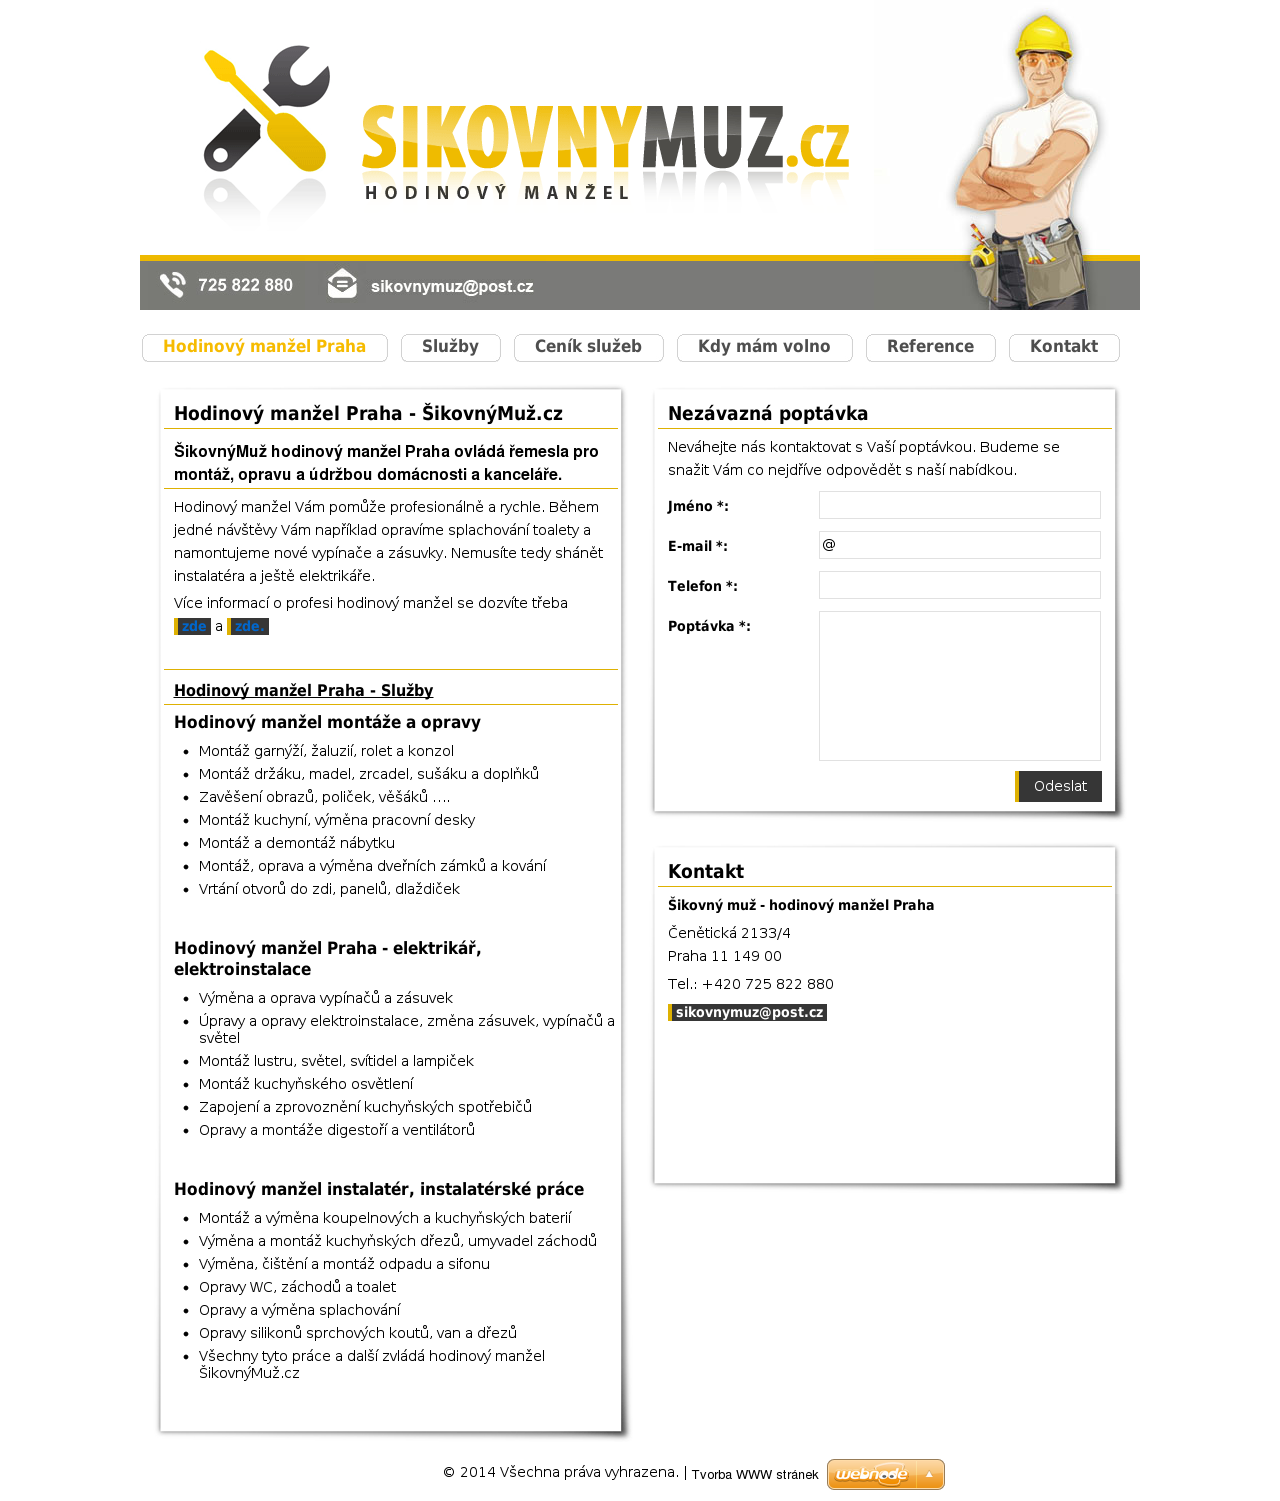 www.sikovnymuz.cz-20151213-d25137be959669861c214e45b3166b8b